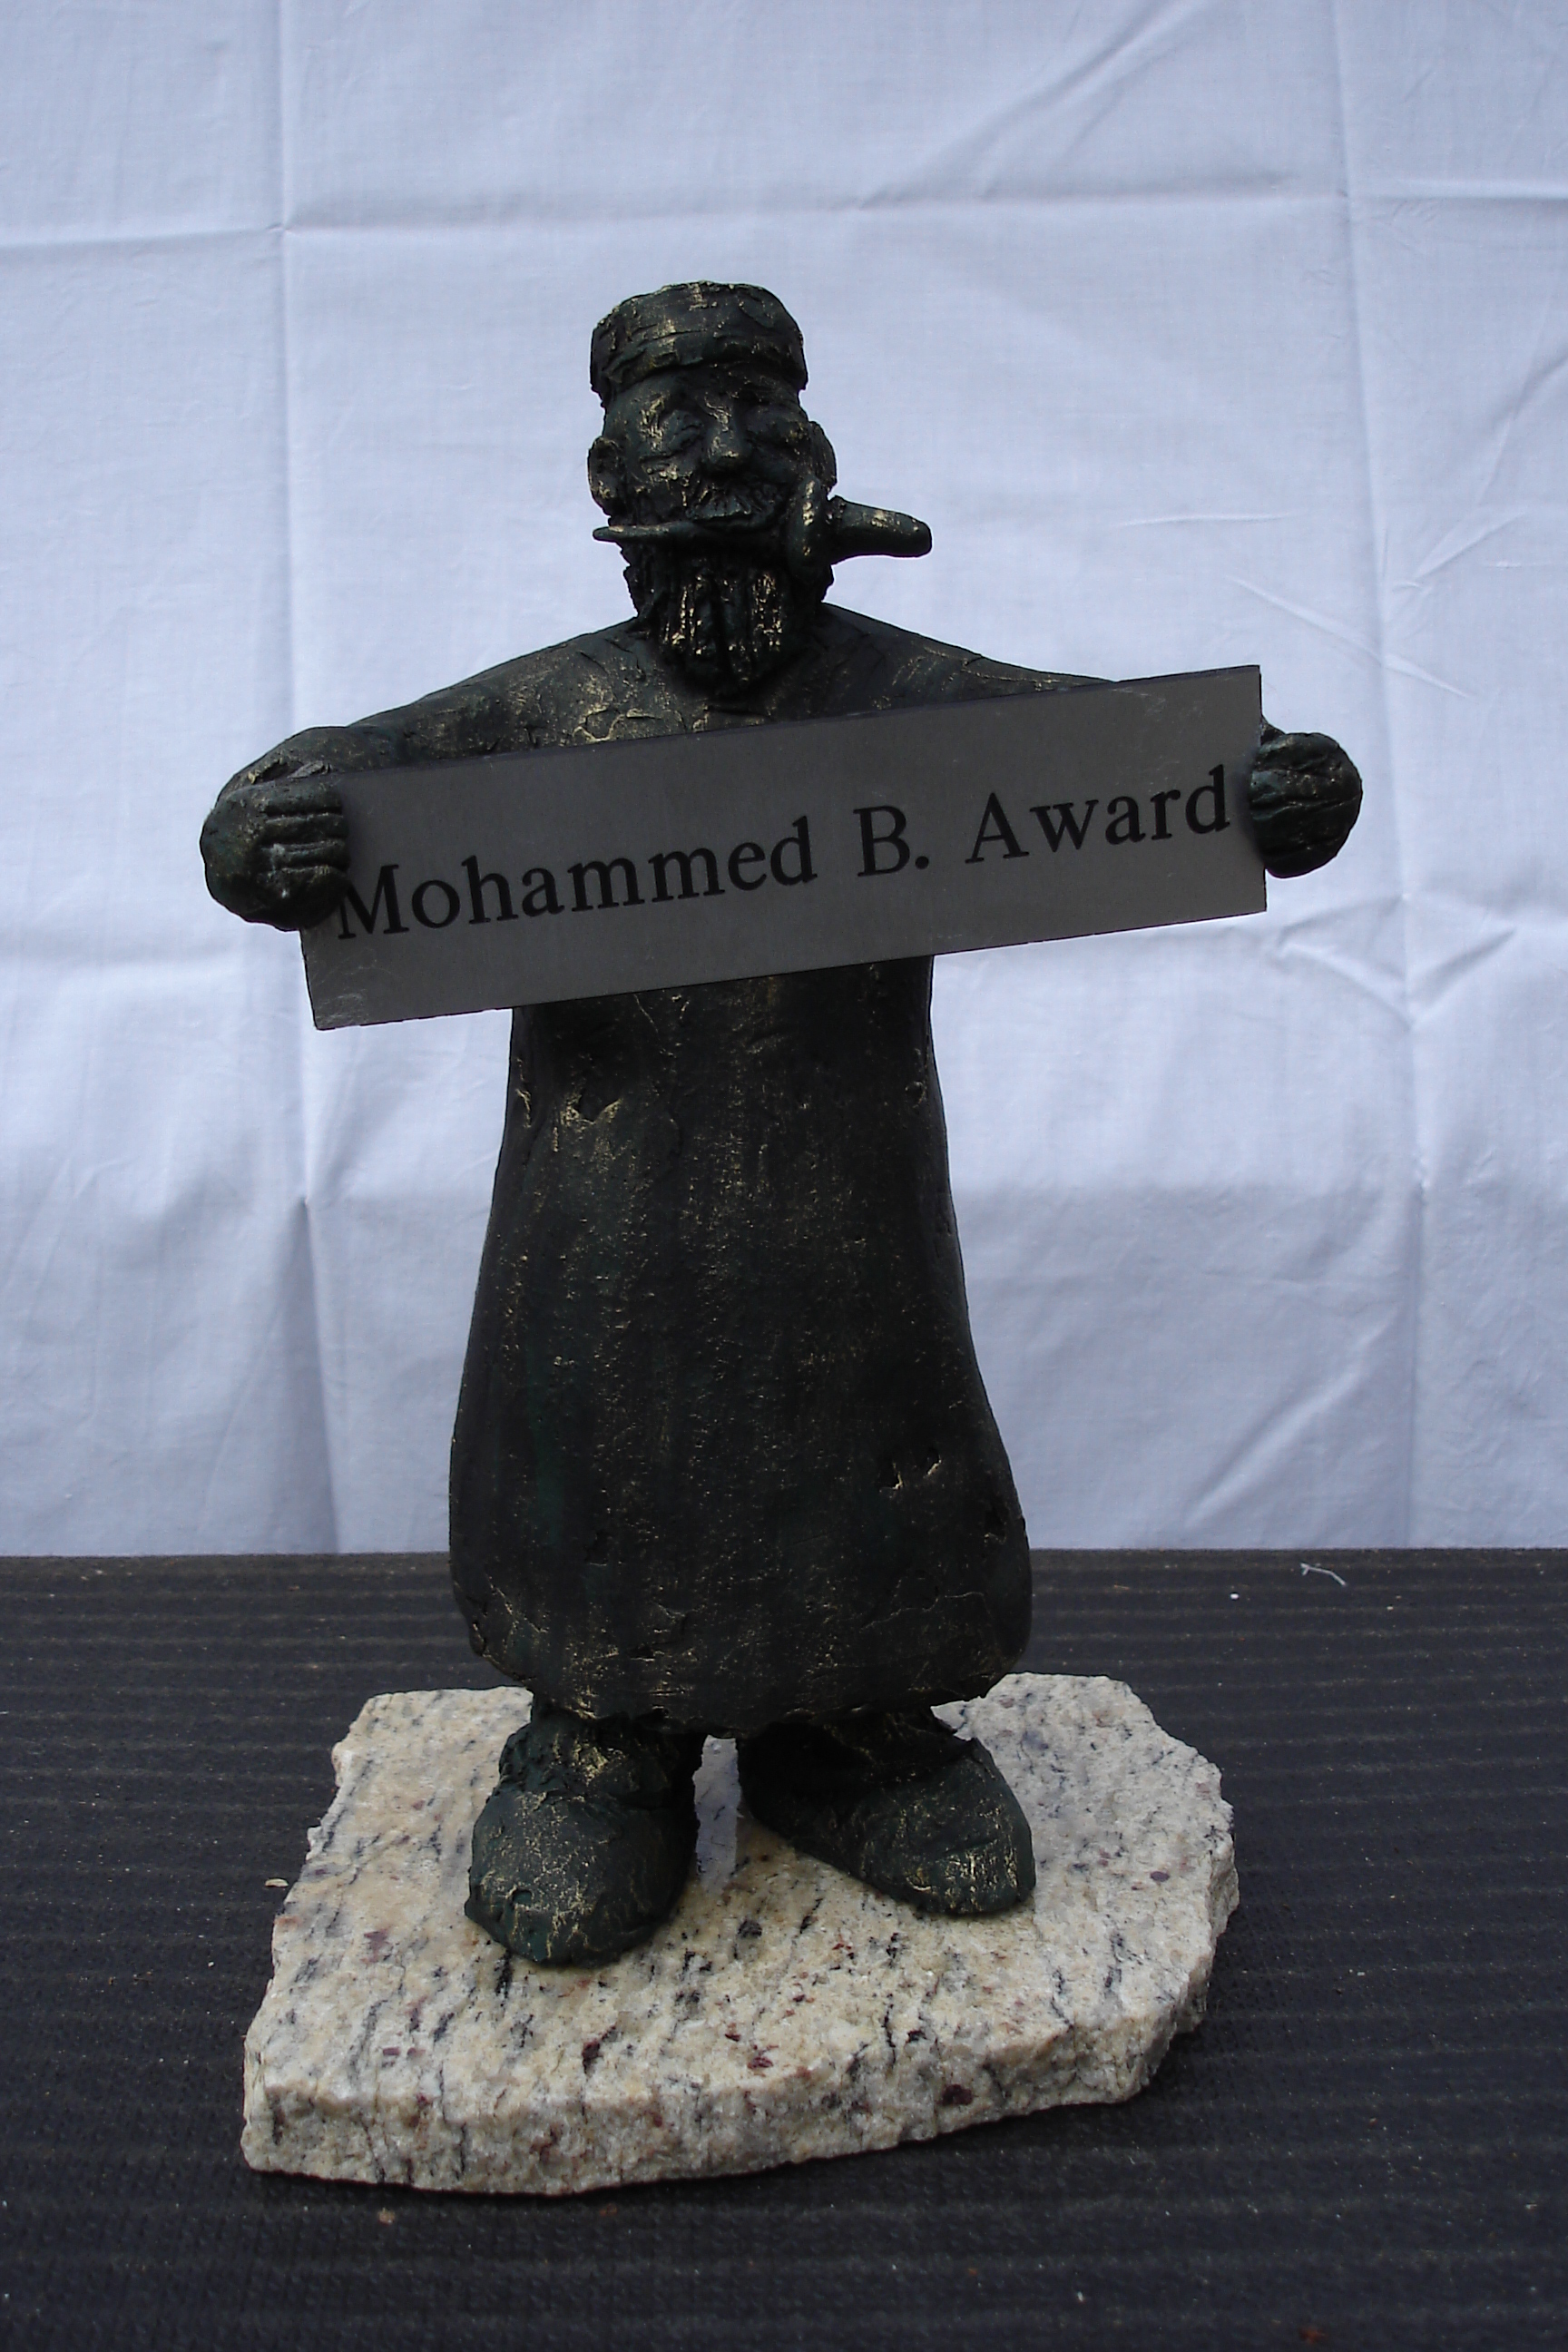 Award (1755k image)